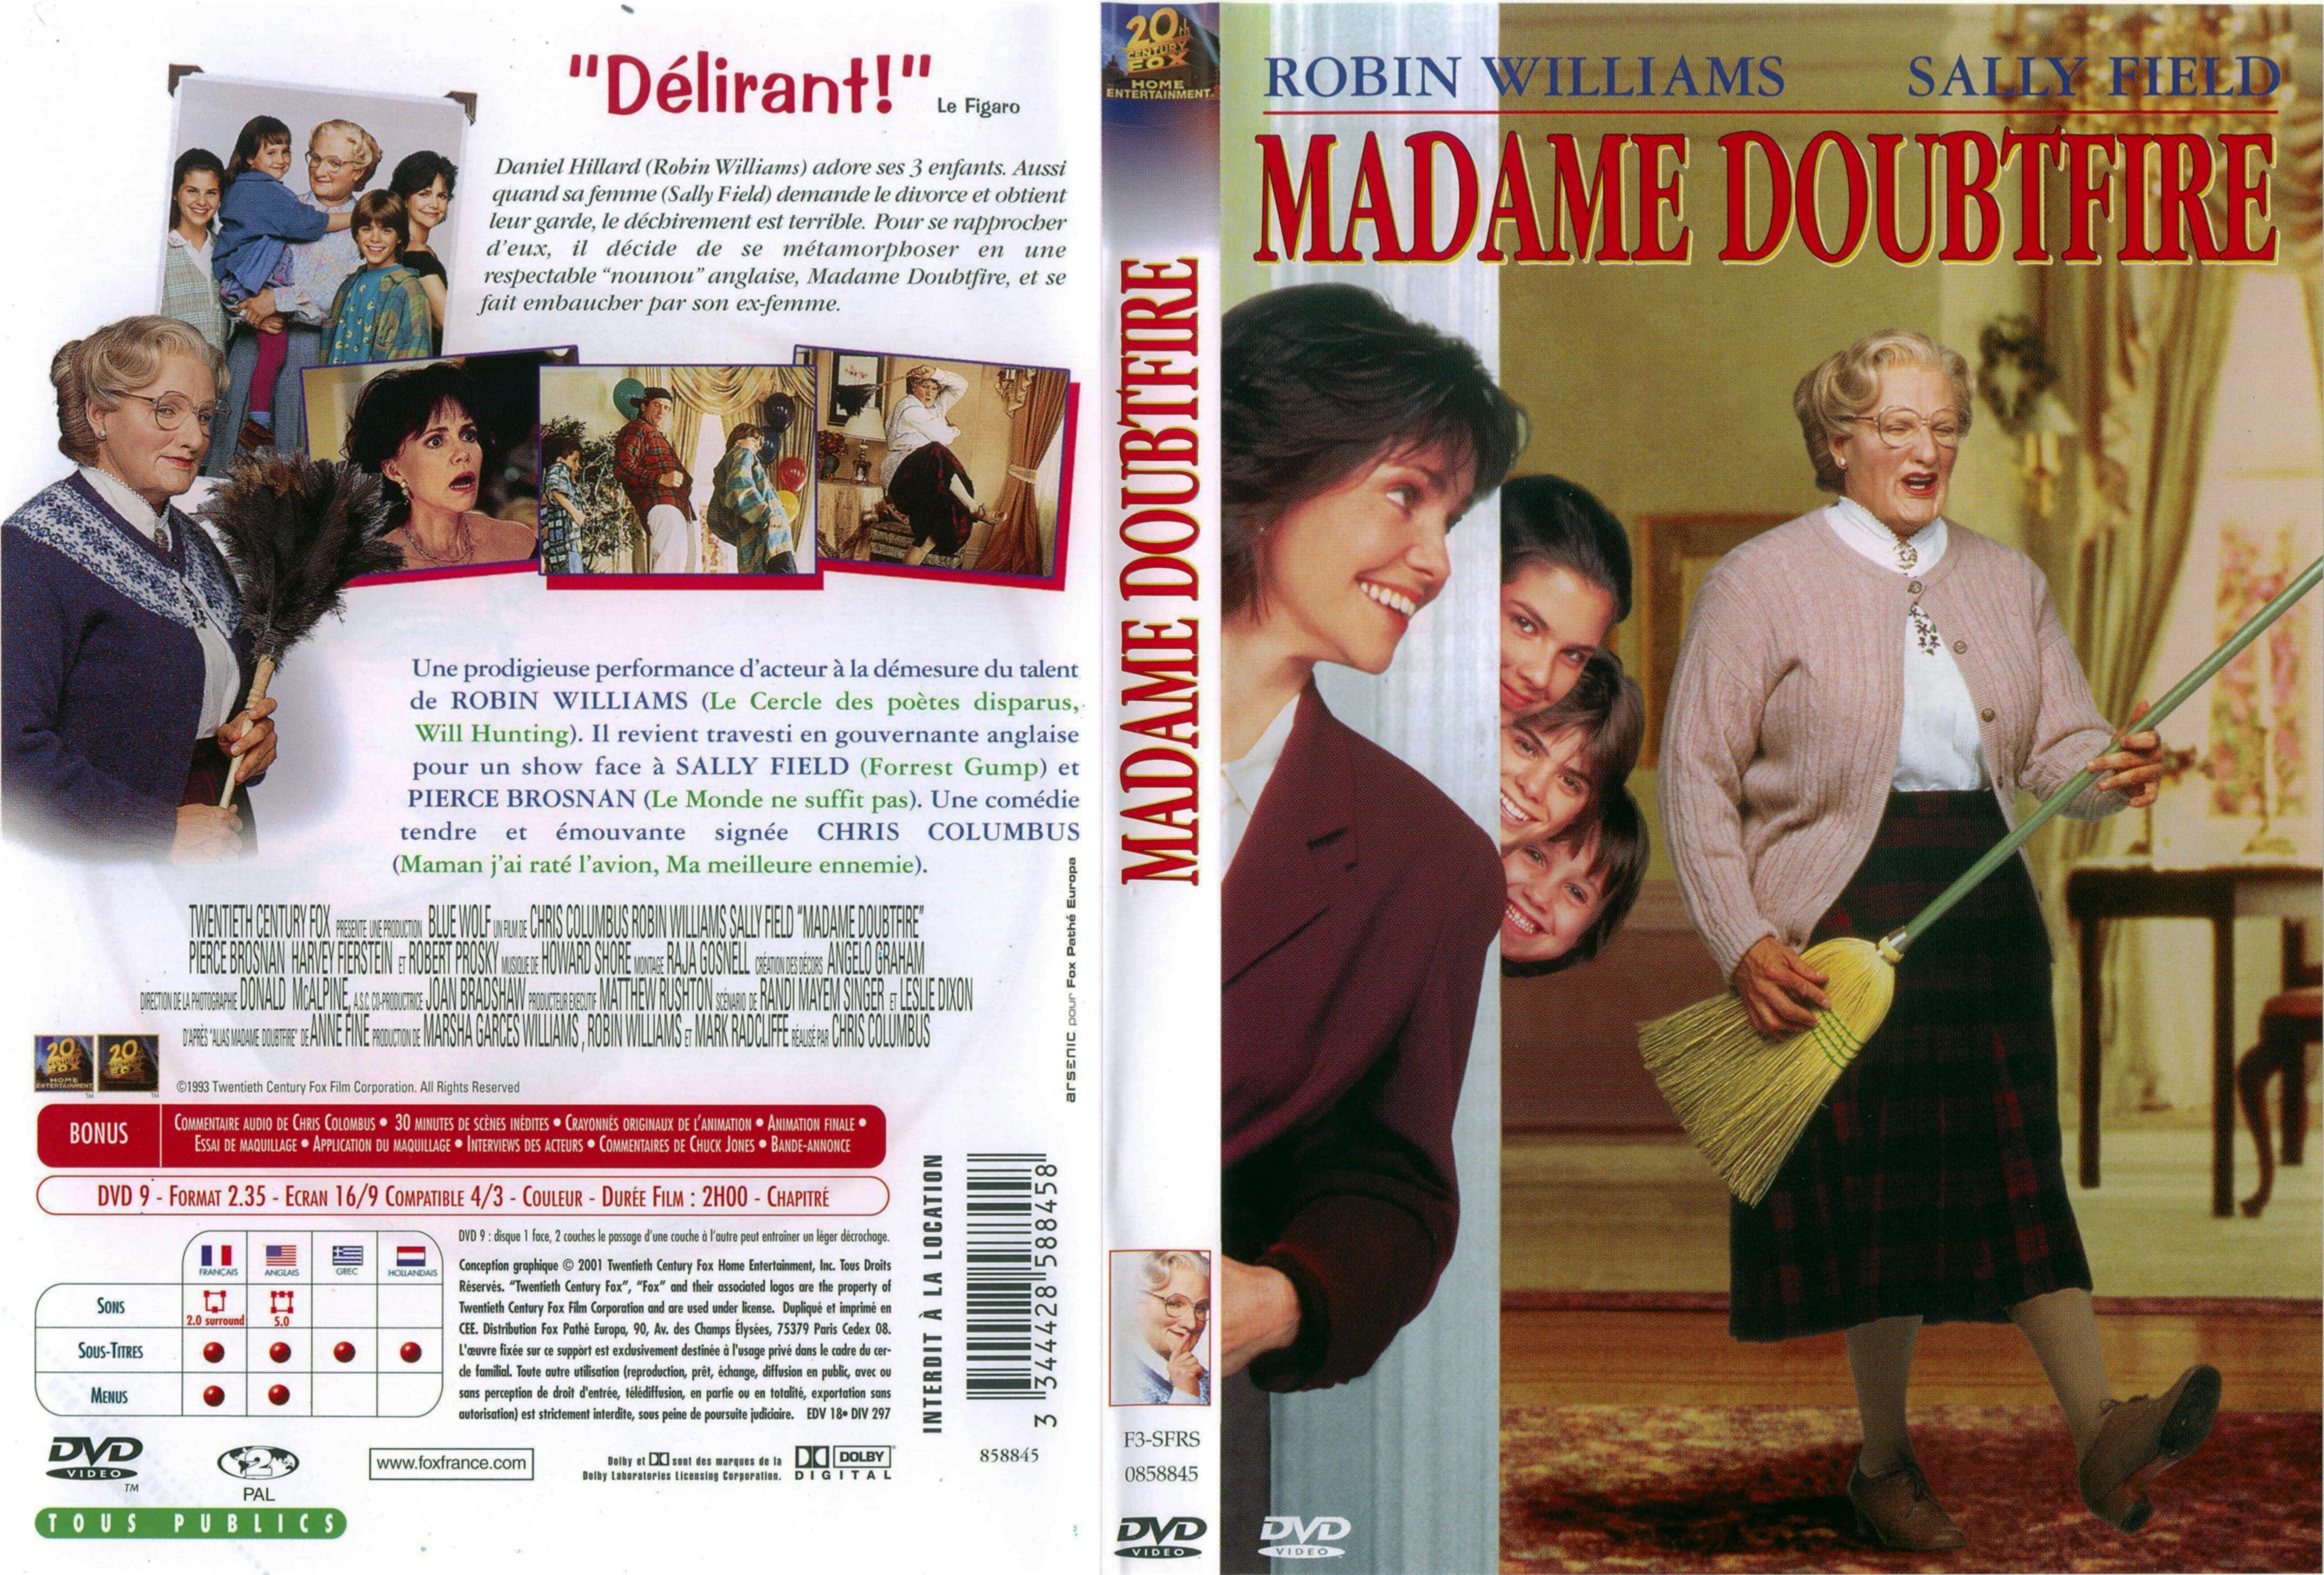 Jaquette DVD Madame Doubtfire